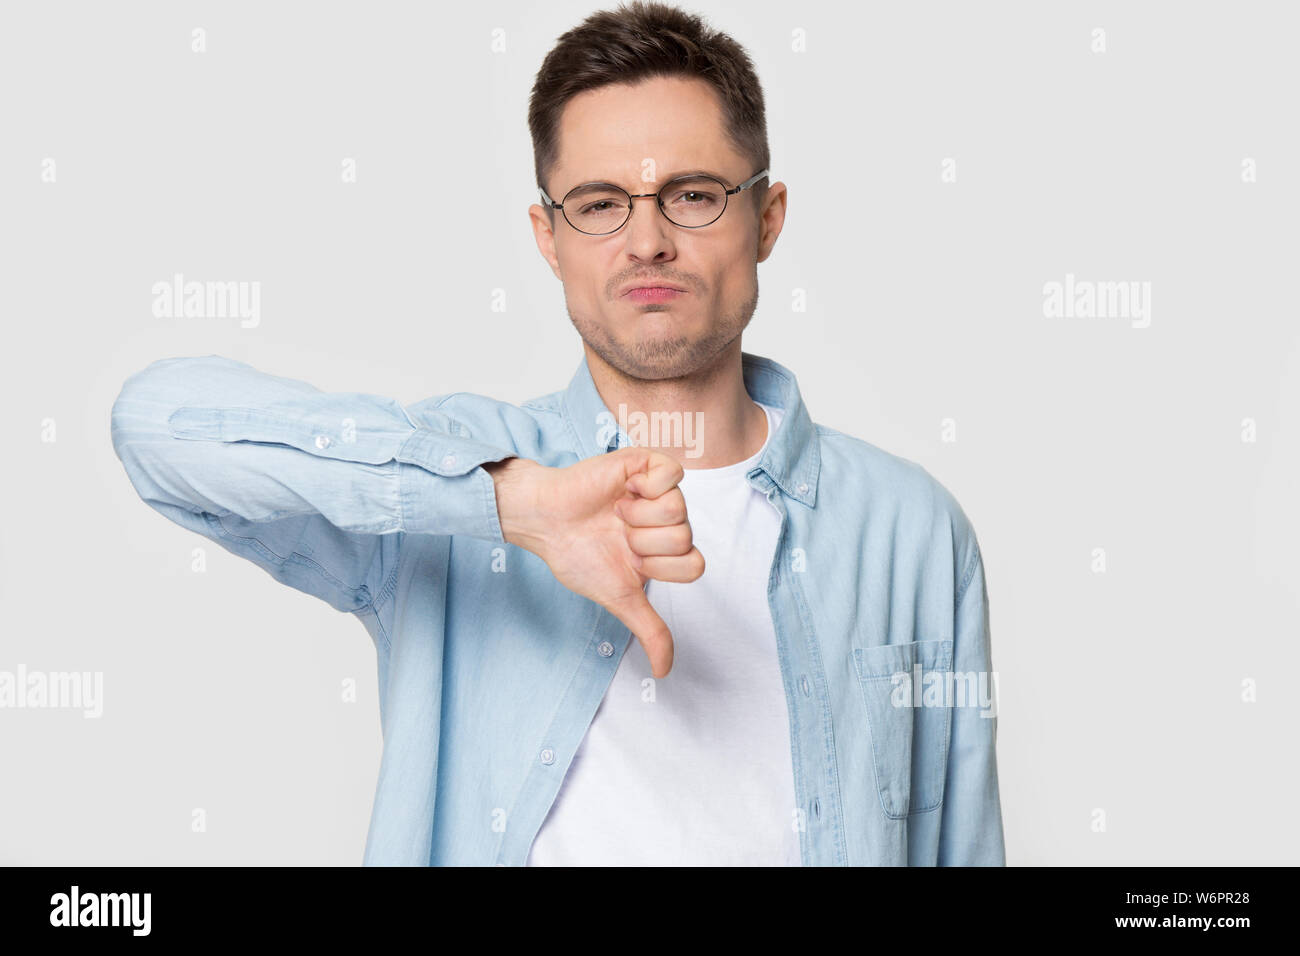 Man looking at camera showing thumbs down negative feedback gesture Stock Photo